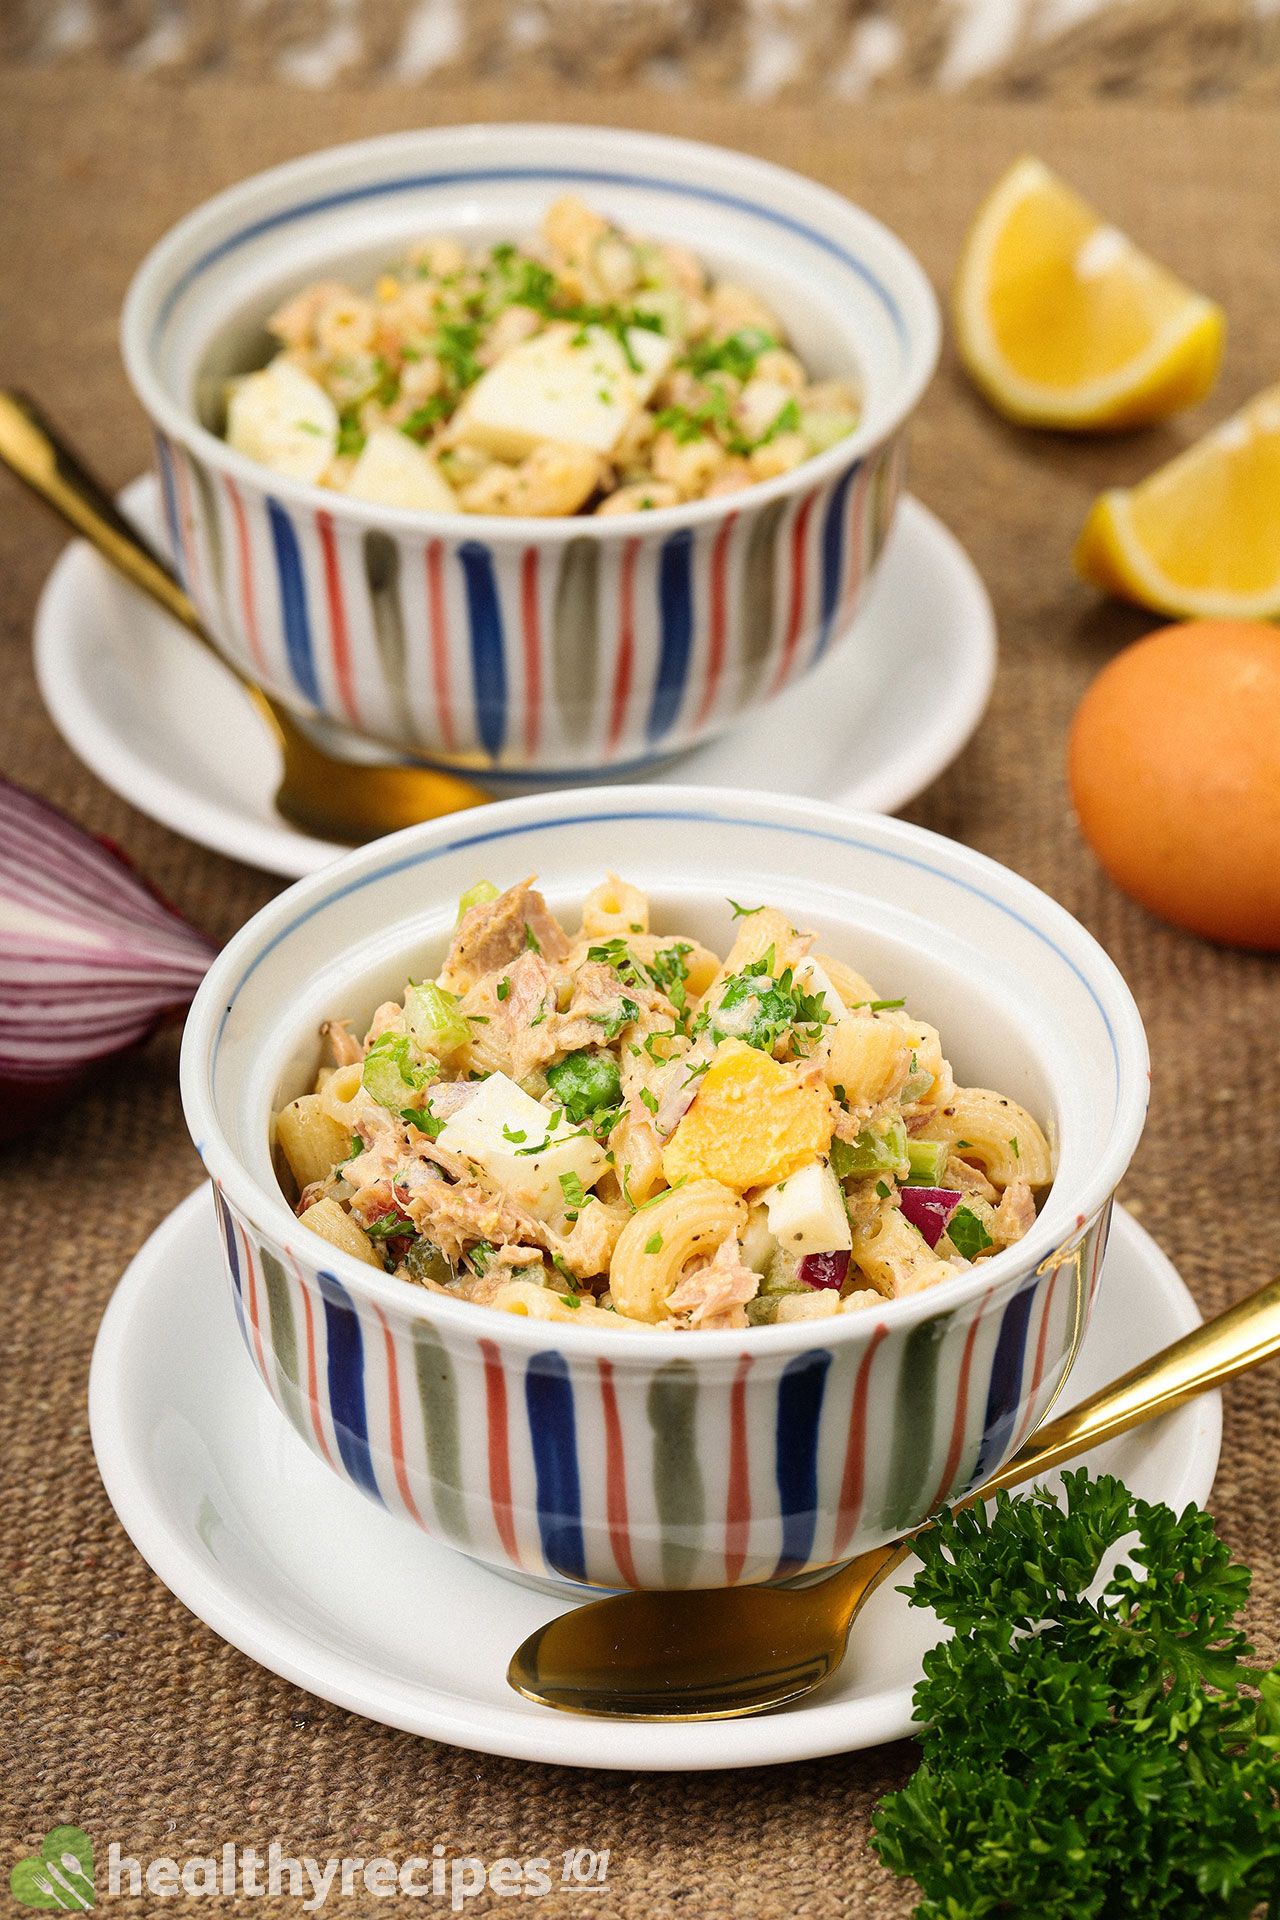 Tips for the Best Tuna Macaroni Salad